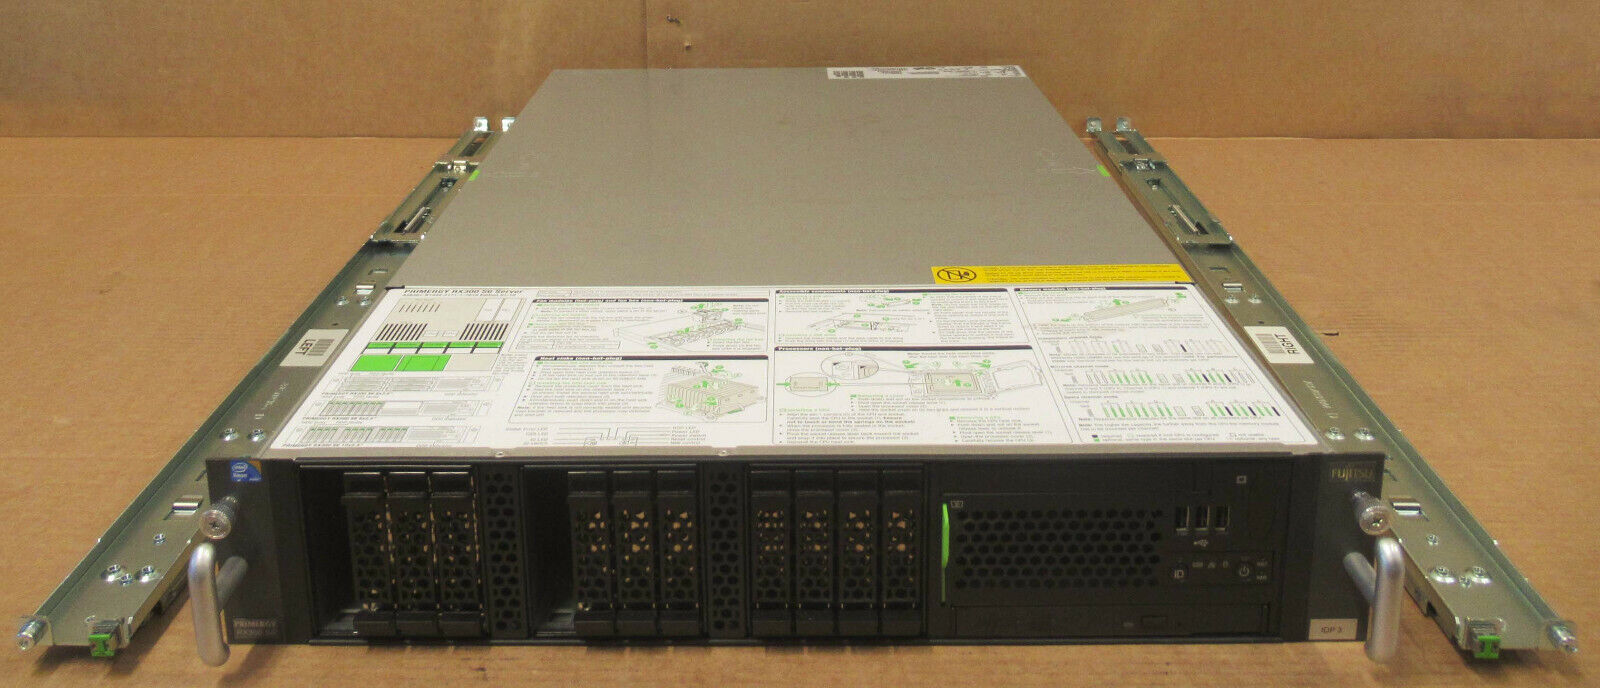 Fujitsu Primergy RX300 S6 1x E5630 2.53GHz 8GB Ram RAID 12xBay 4xLPE12002 Server